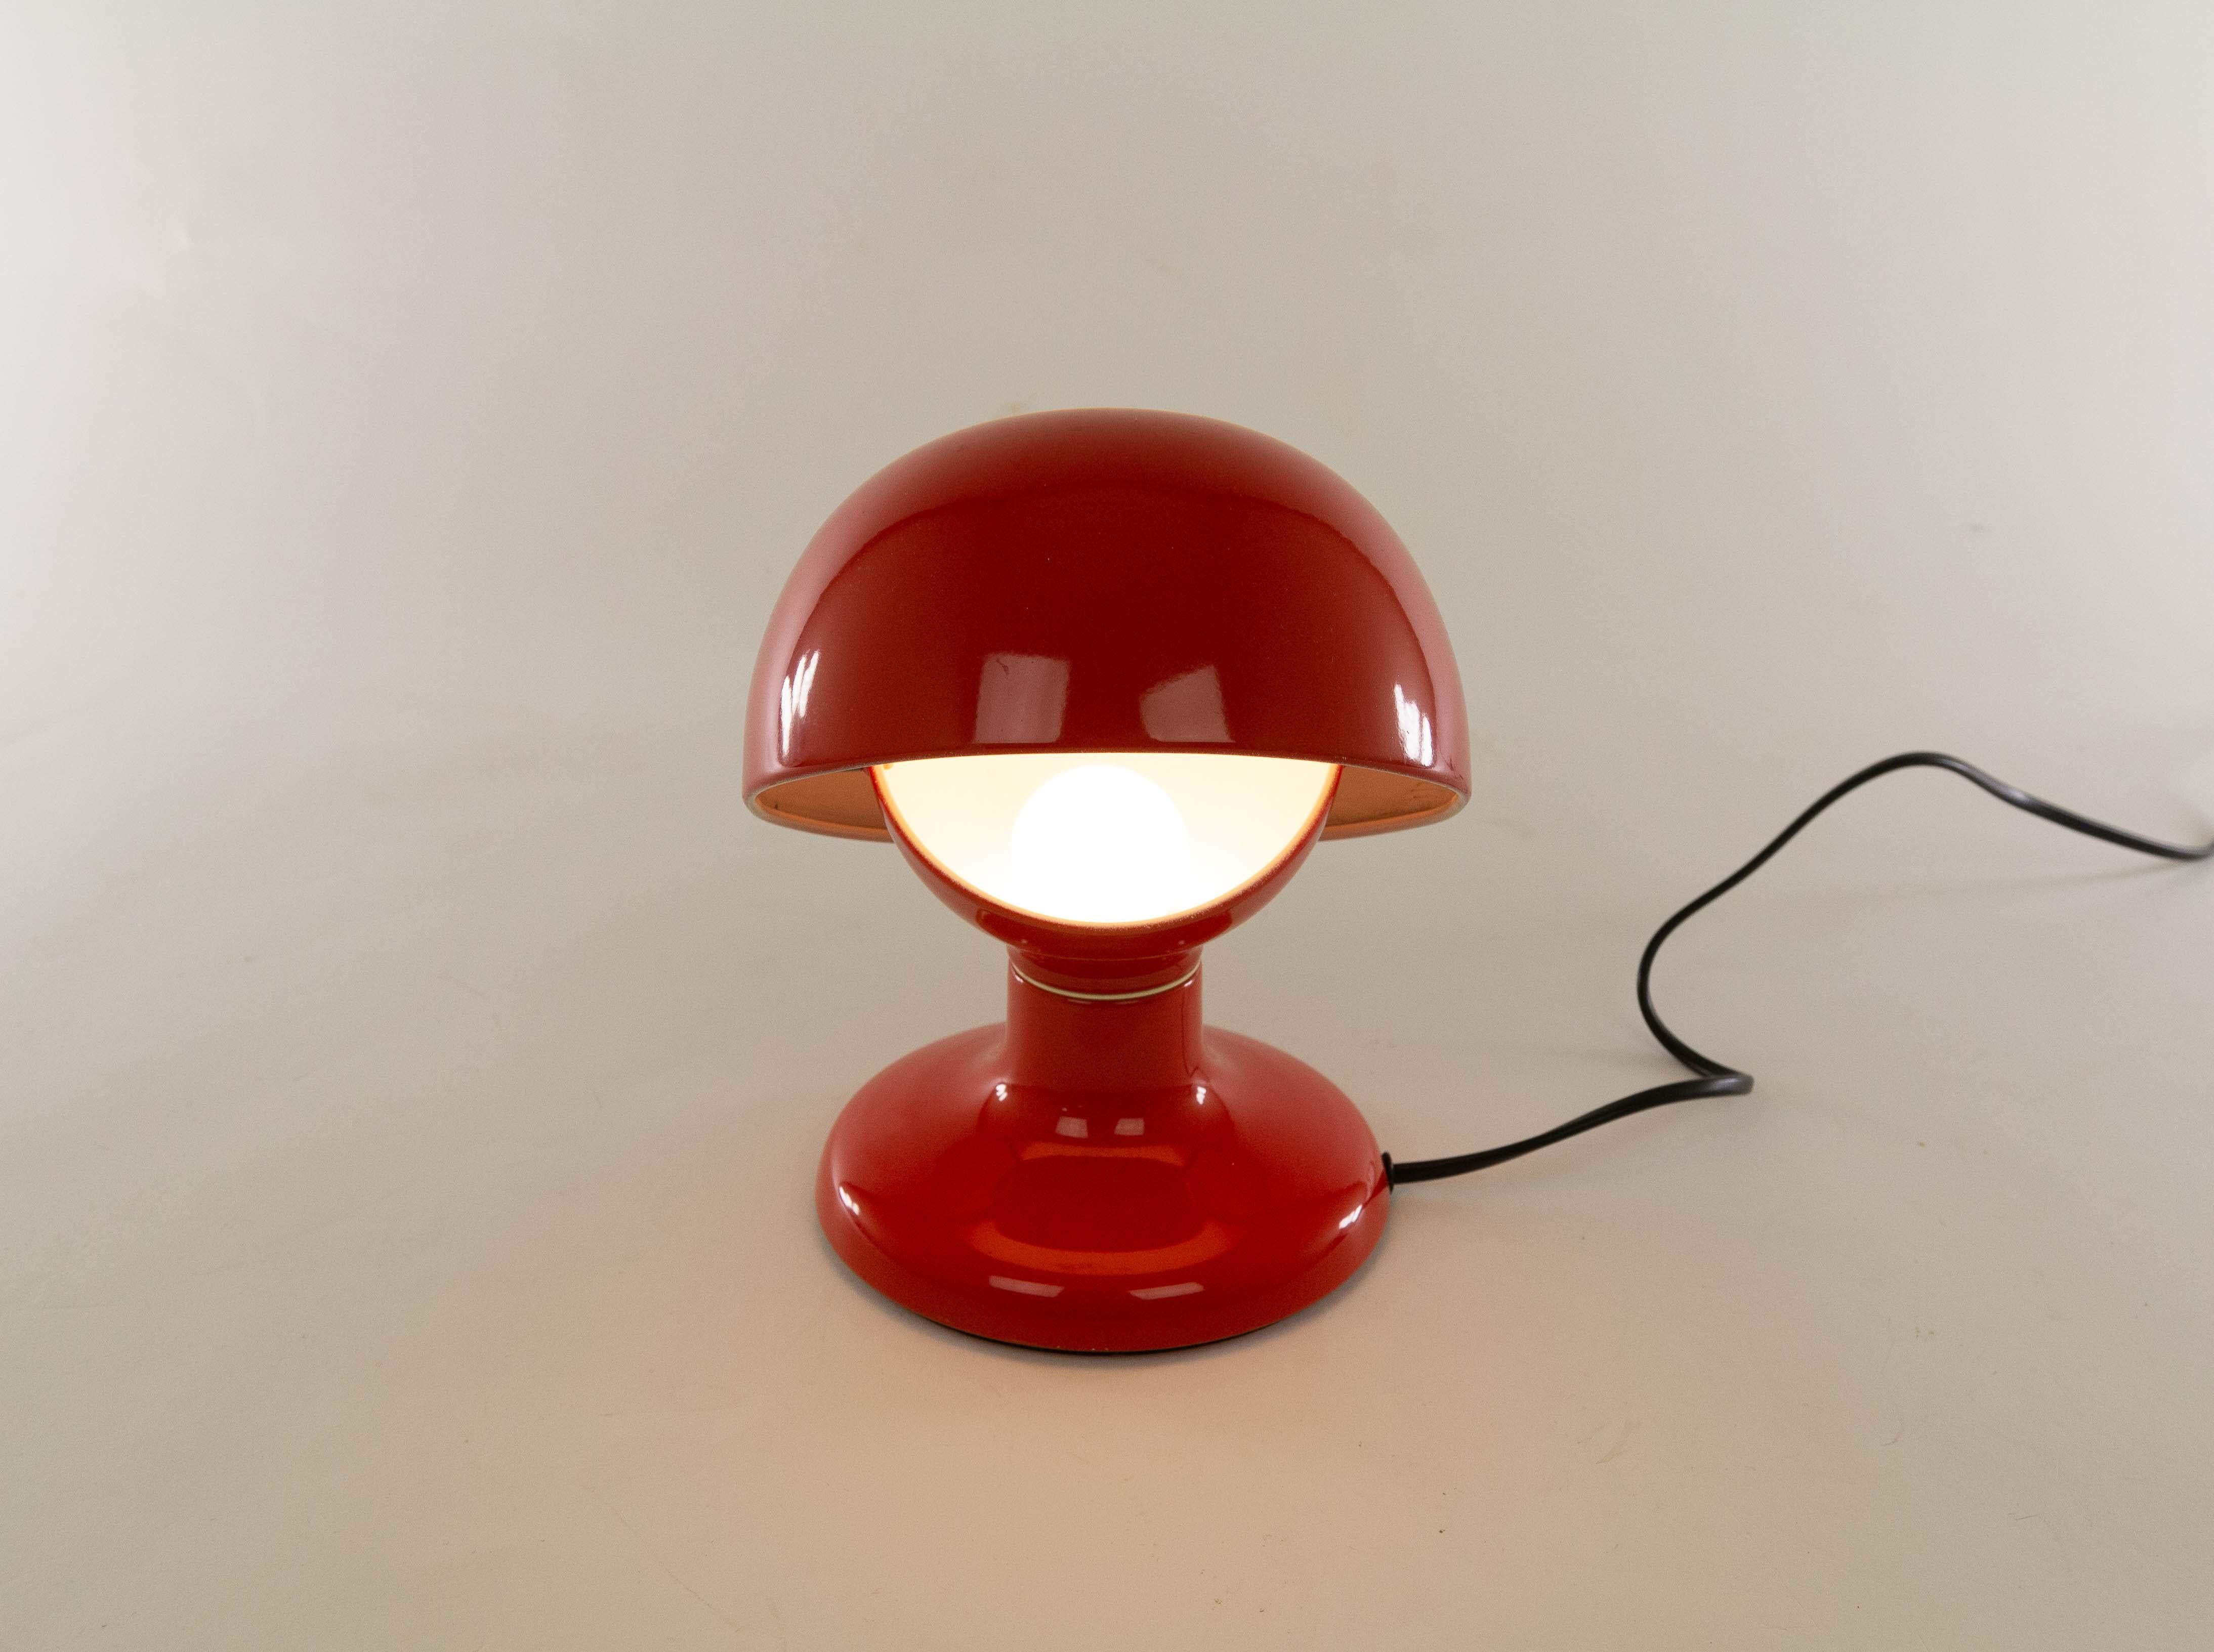 Italian Jucker Table Lamp by Tobia Scarpa for Flos, 1963